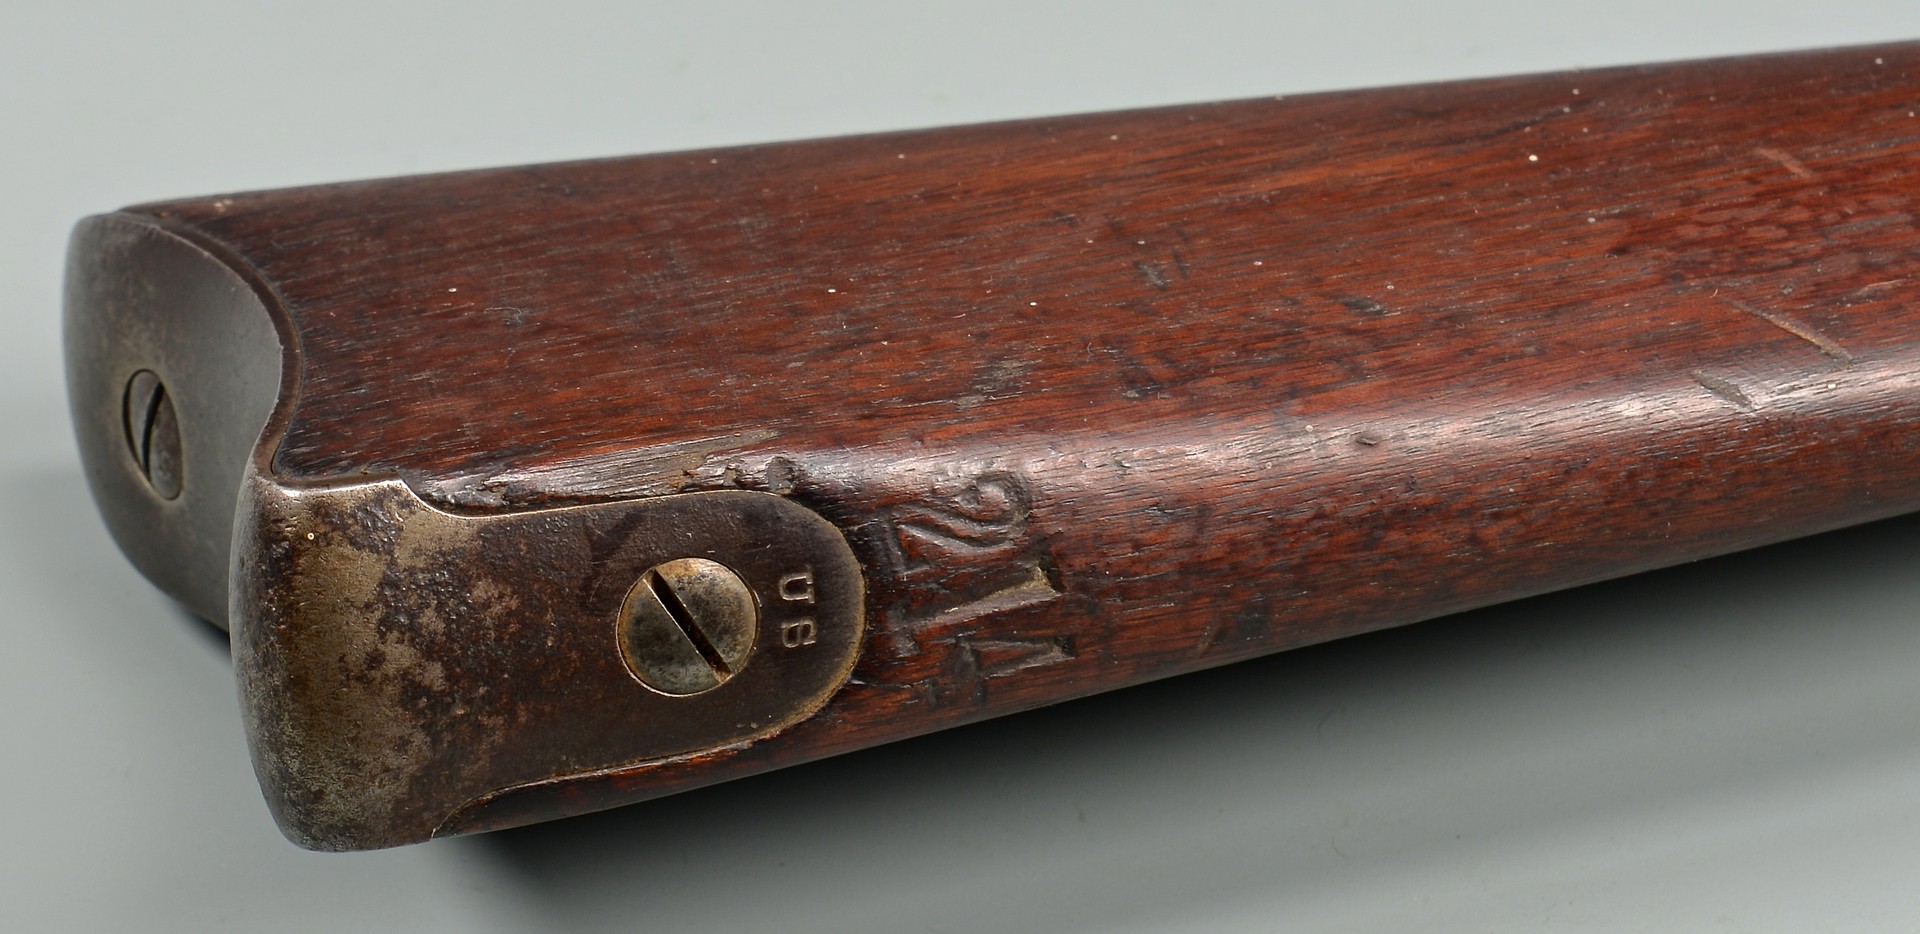 Lot 543: U.S. Model 1884 Springfield Cadet Rifle